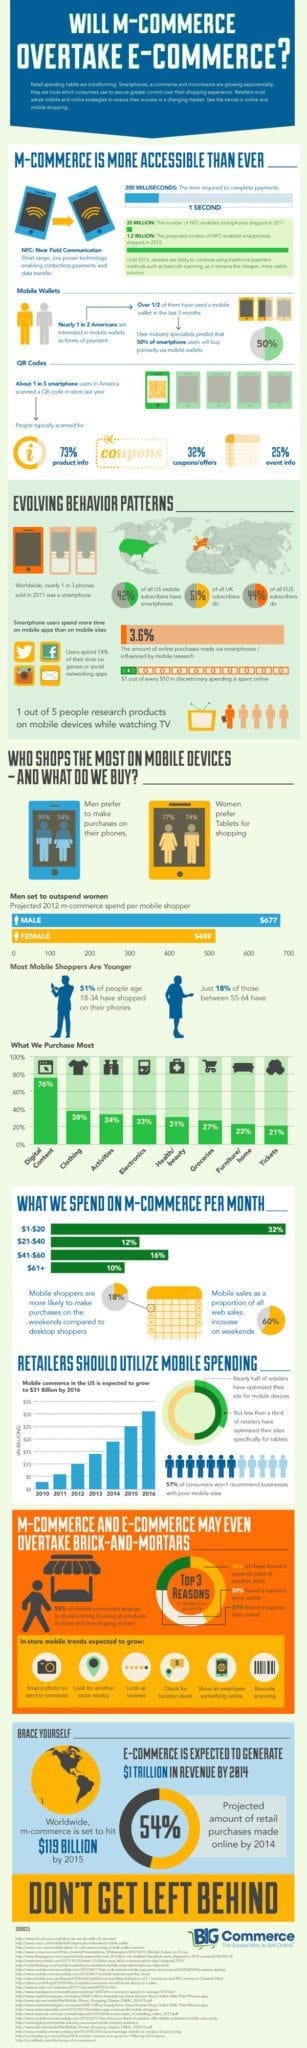 m-Commerce Overtaking e-Commerce Infographic